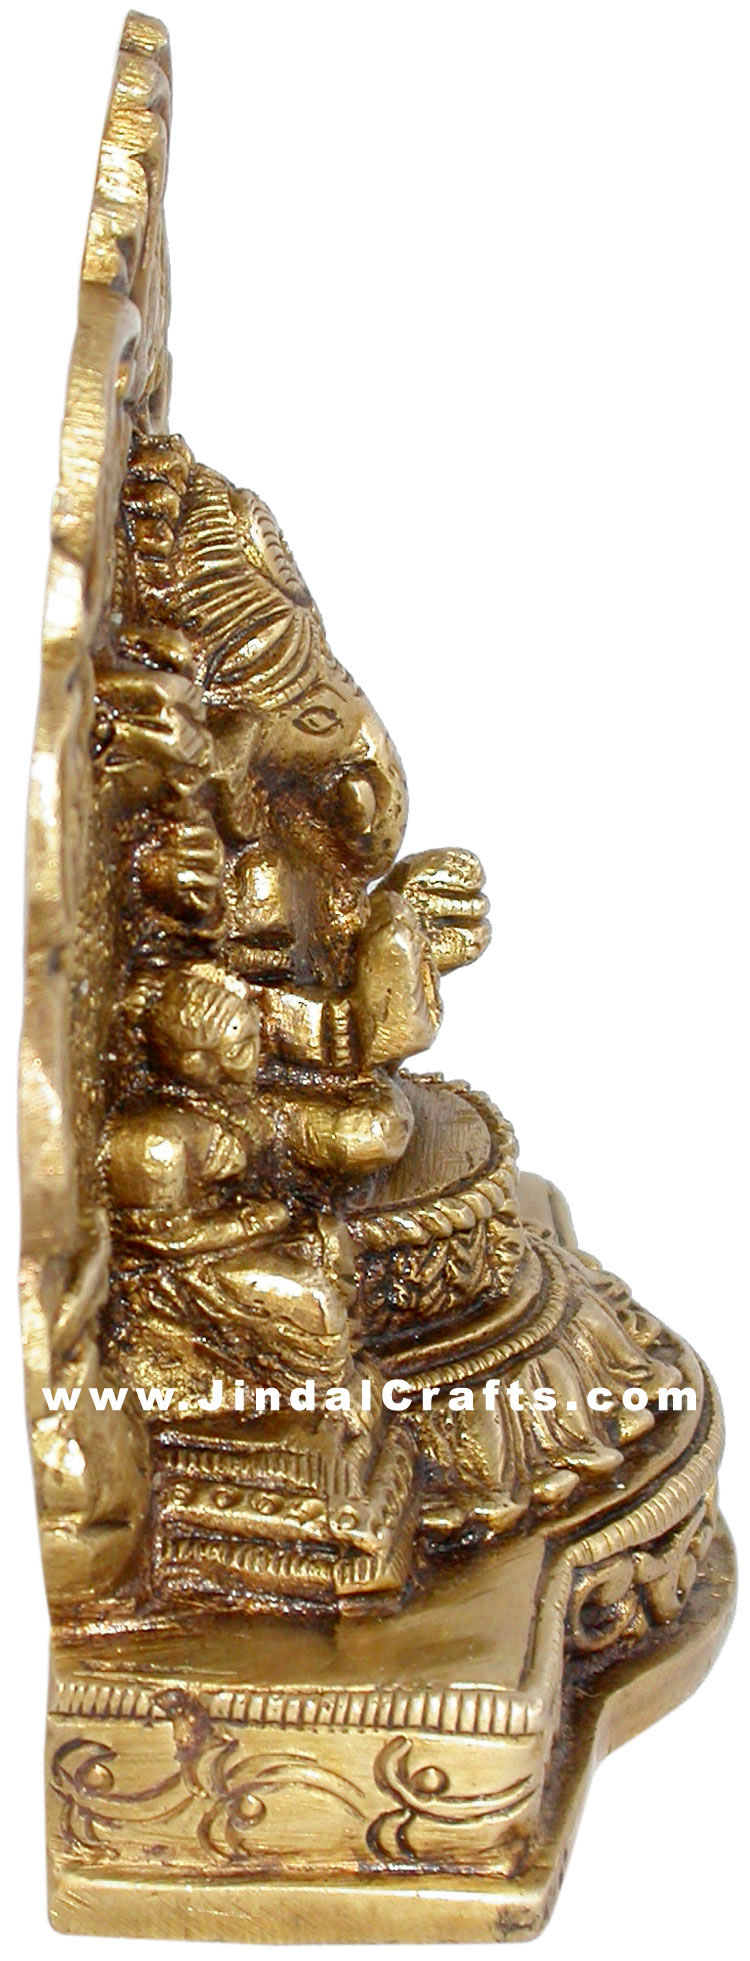 Ganesha Indian Religious God Sculpture Statue Idol Art